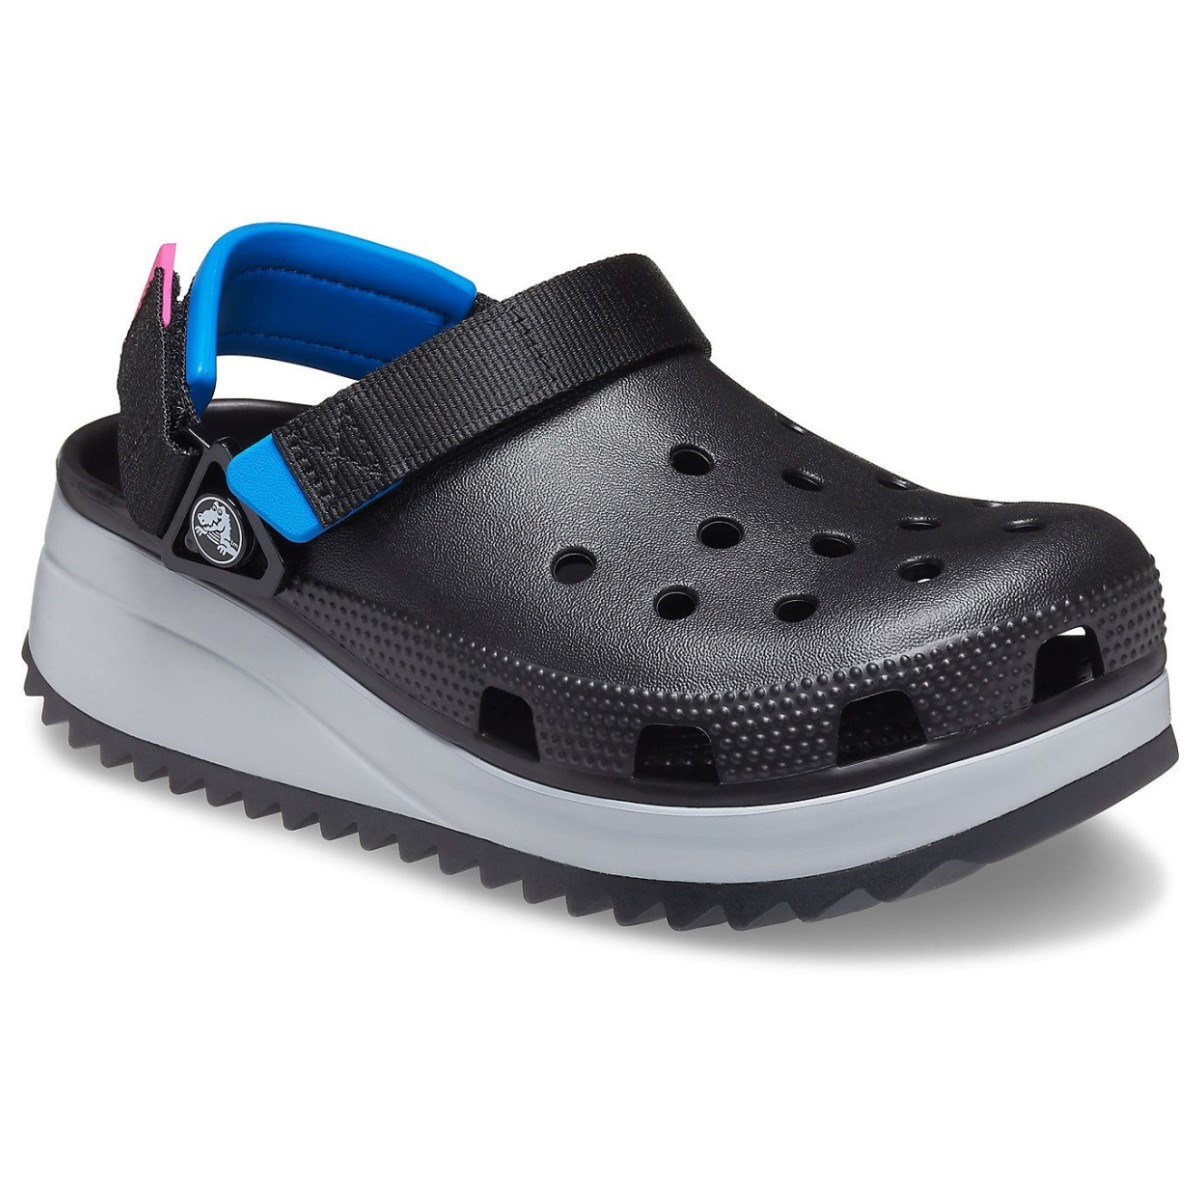 Crocs Unisex Sandalet 206772 Black